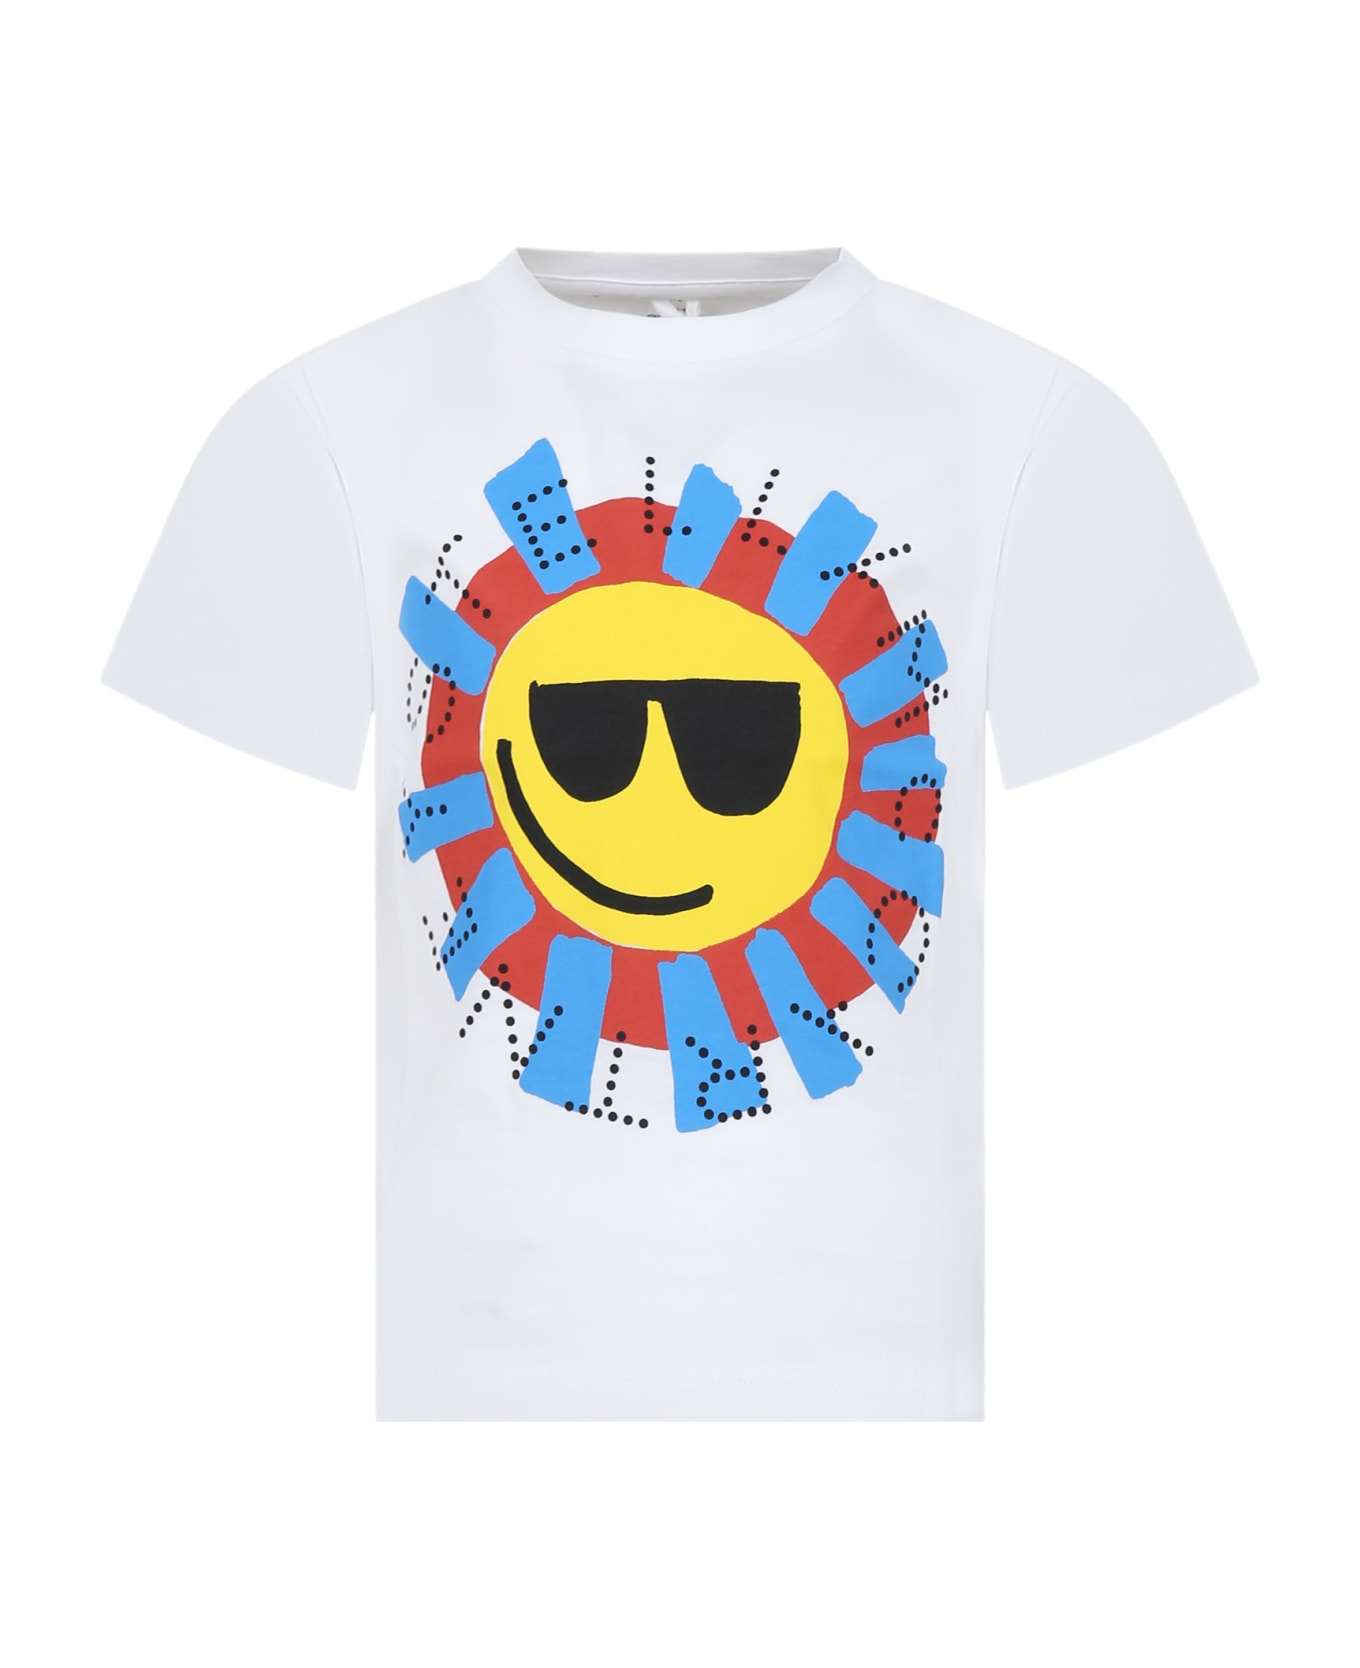 Stella McCartney Kids White T-shirt For Boy With Sun - White